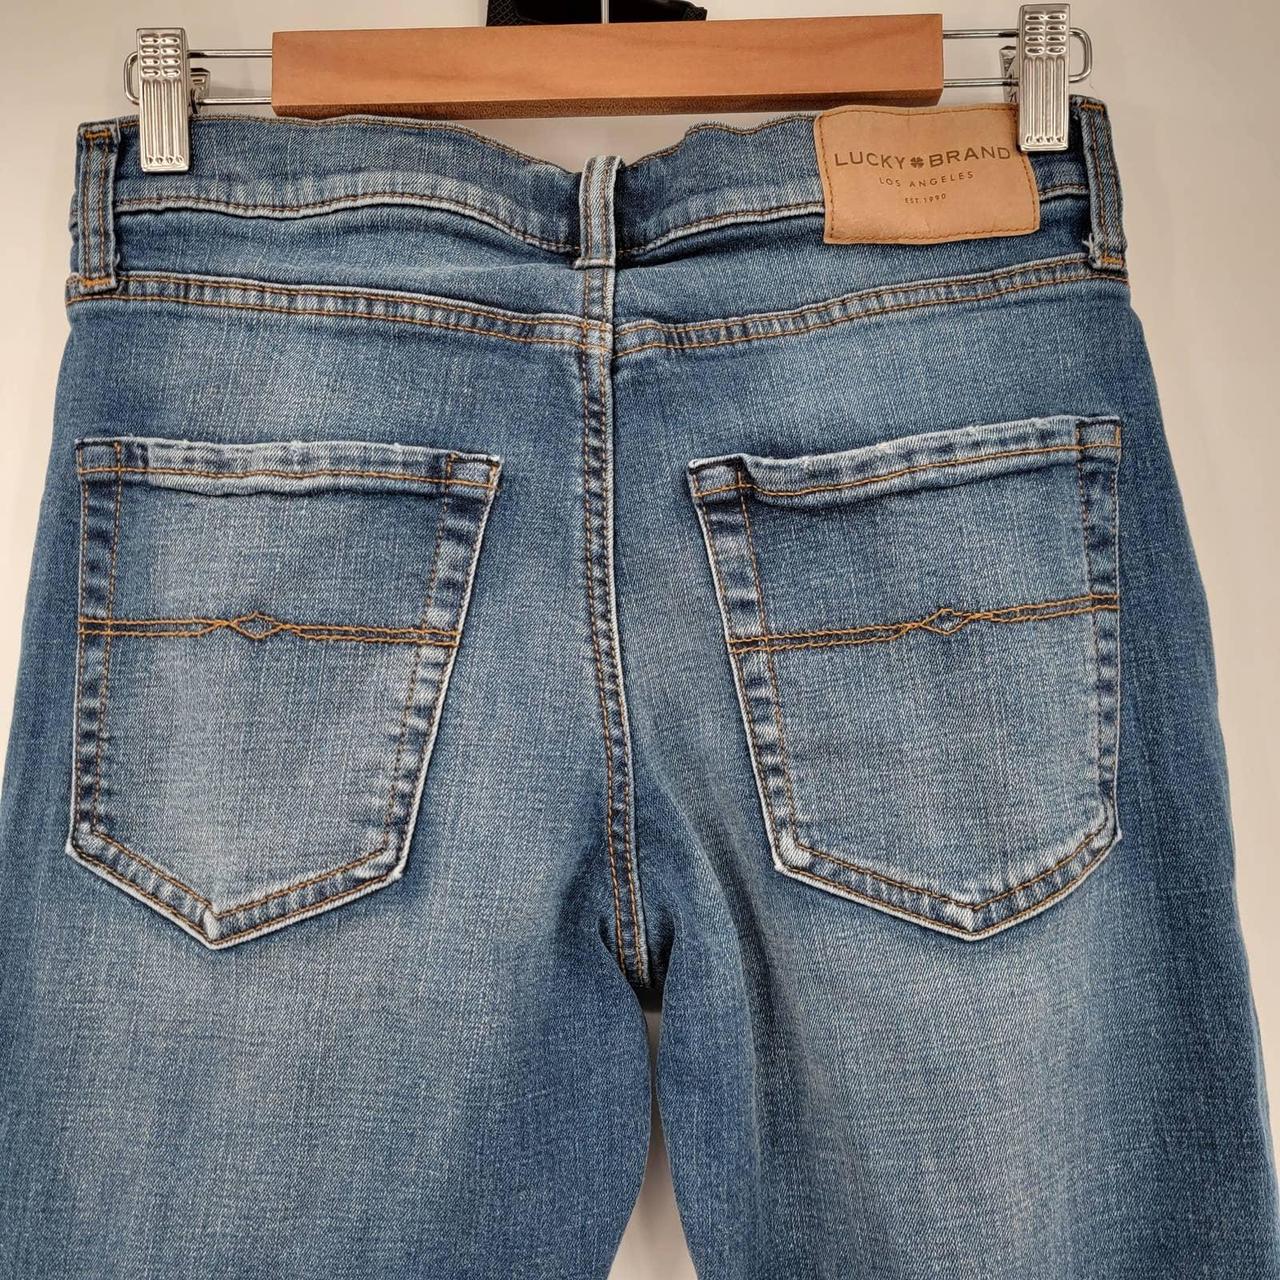 Lucky Brand 410 Athletic Slim Distressed Jeans Sz - Depop